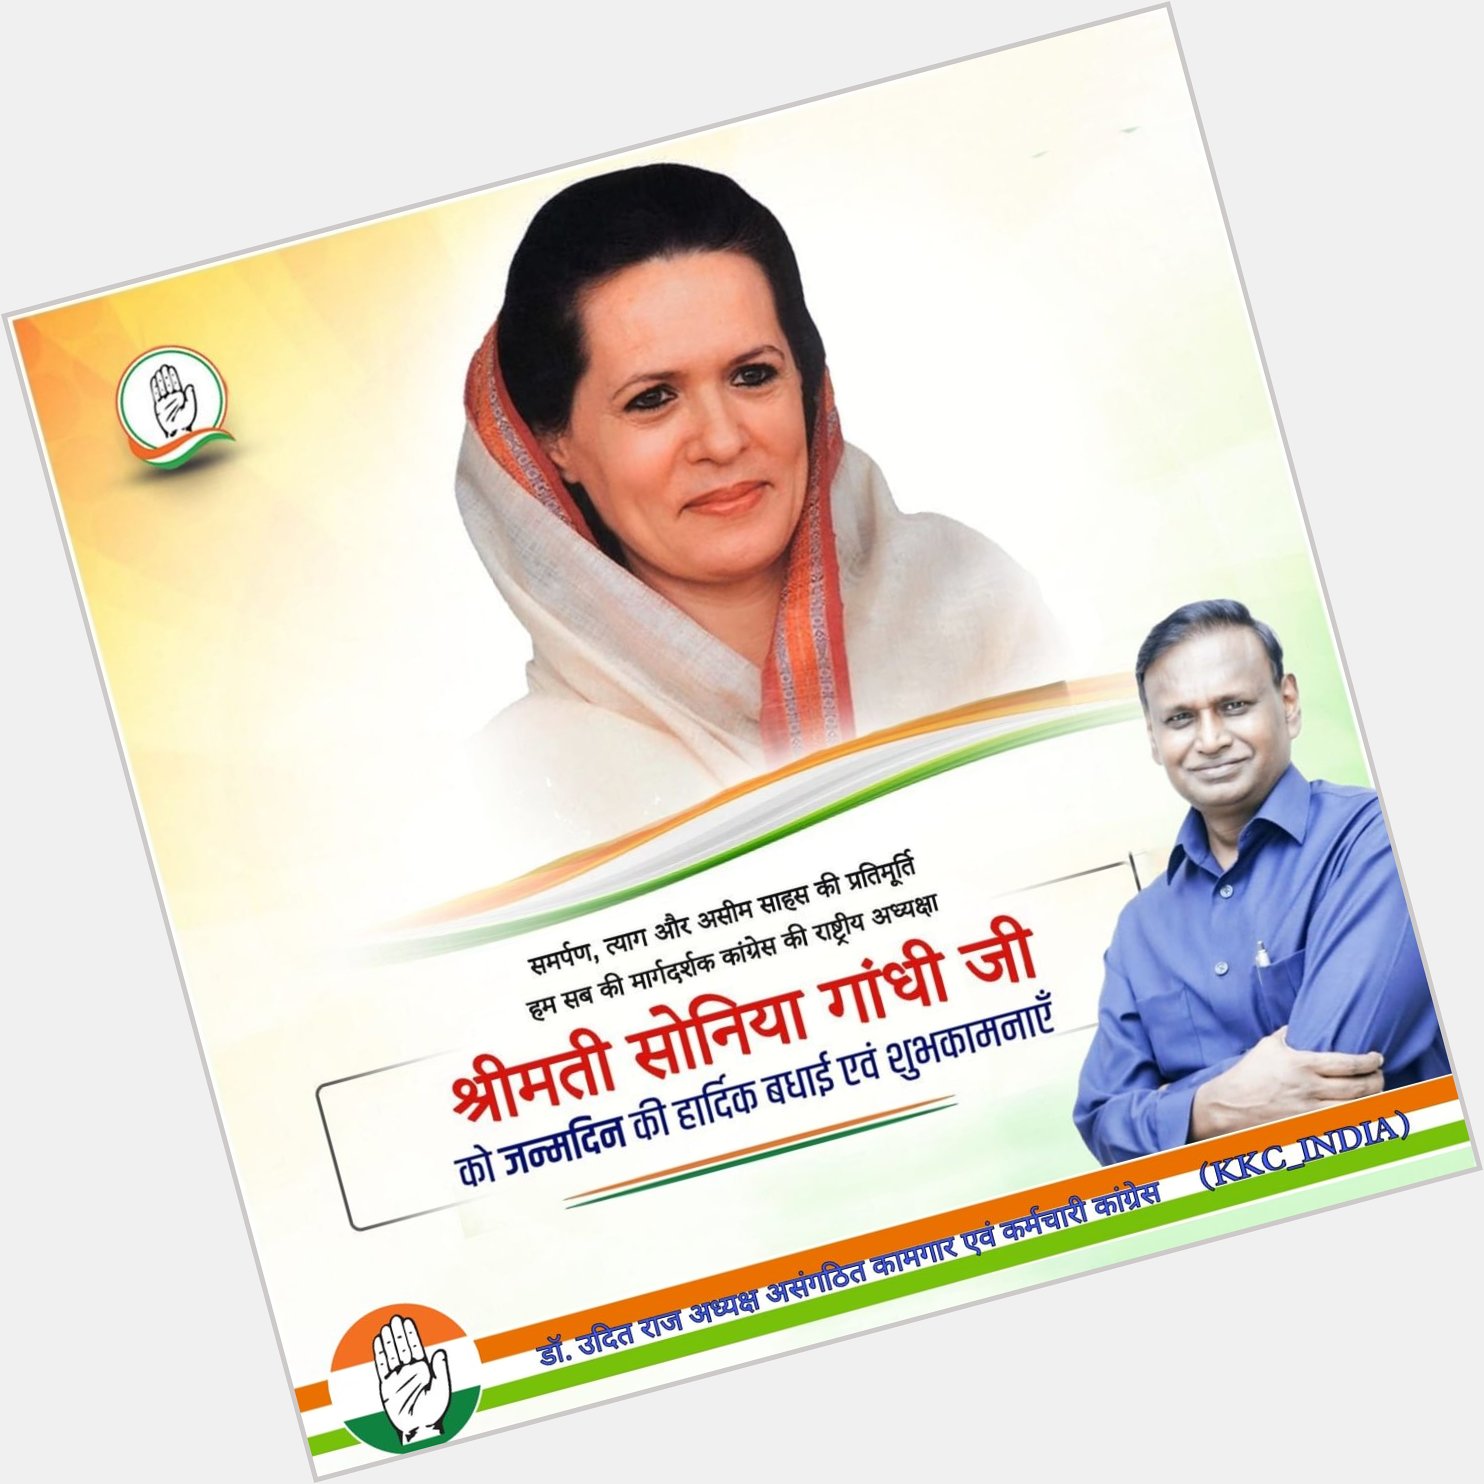 Happy Birthday Smt. Sonia Gandhi Ji , National President, Congress 